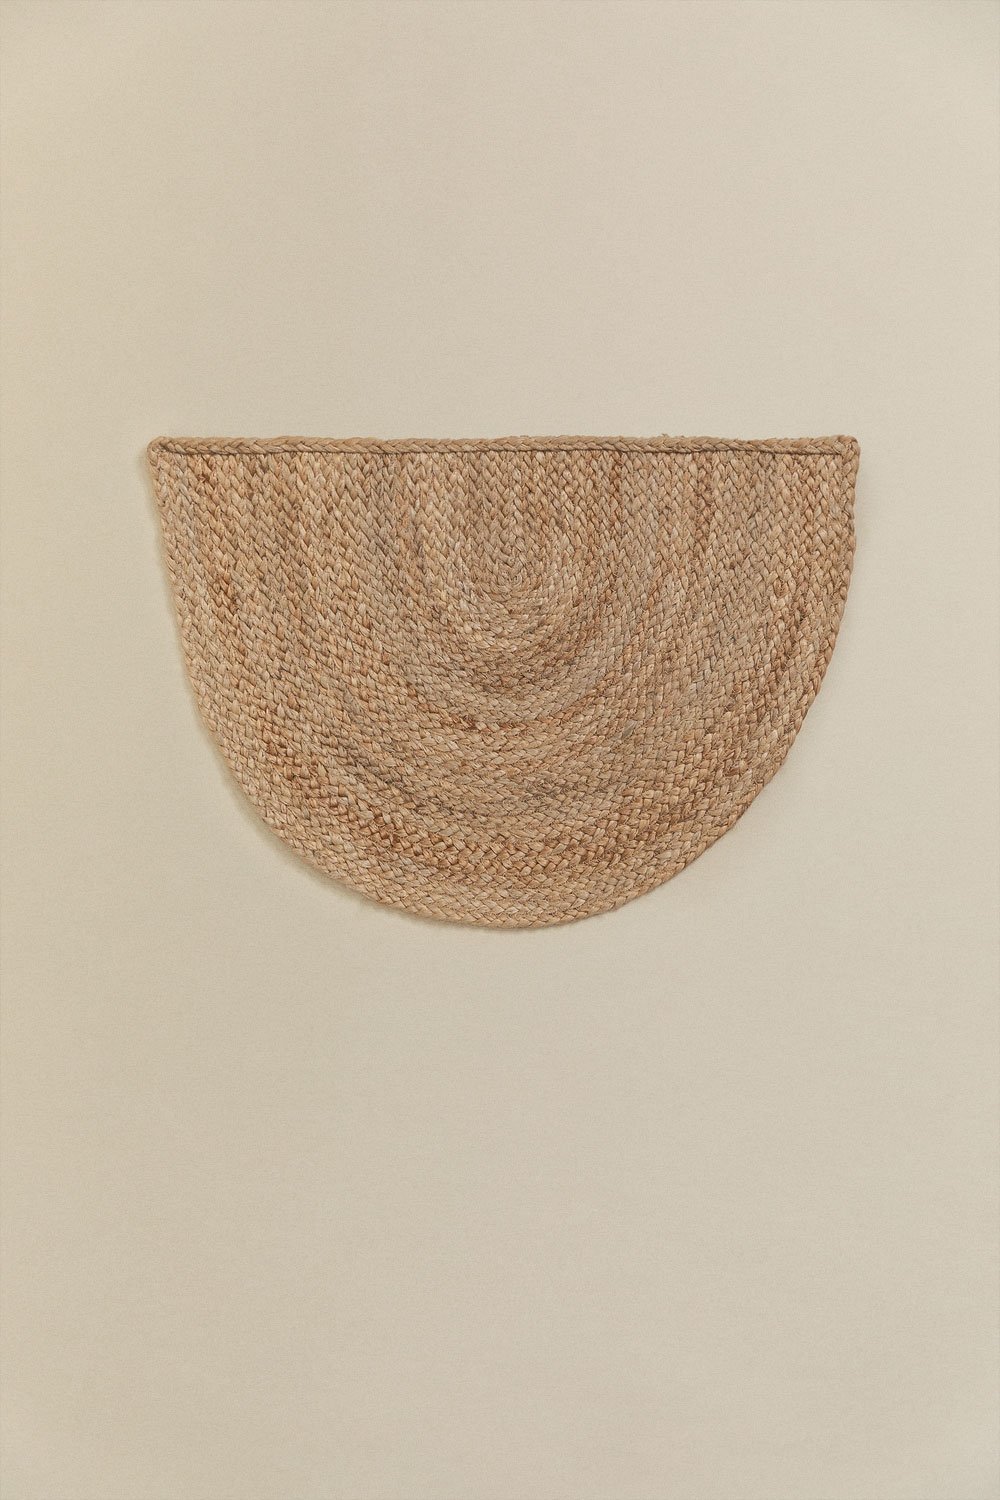 Capacho Semicircular em Juta (62x40 cm) Fondreset, imagem de galeria 1